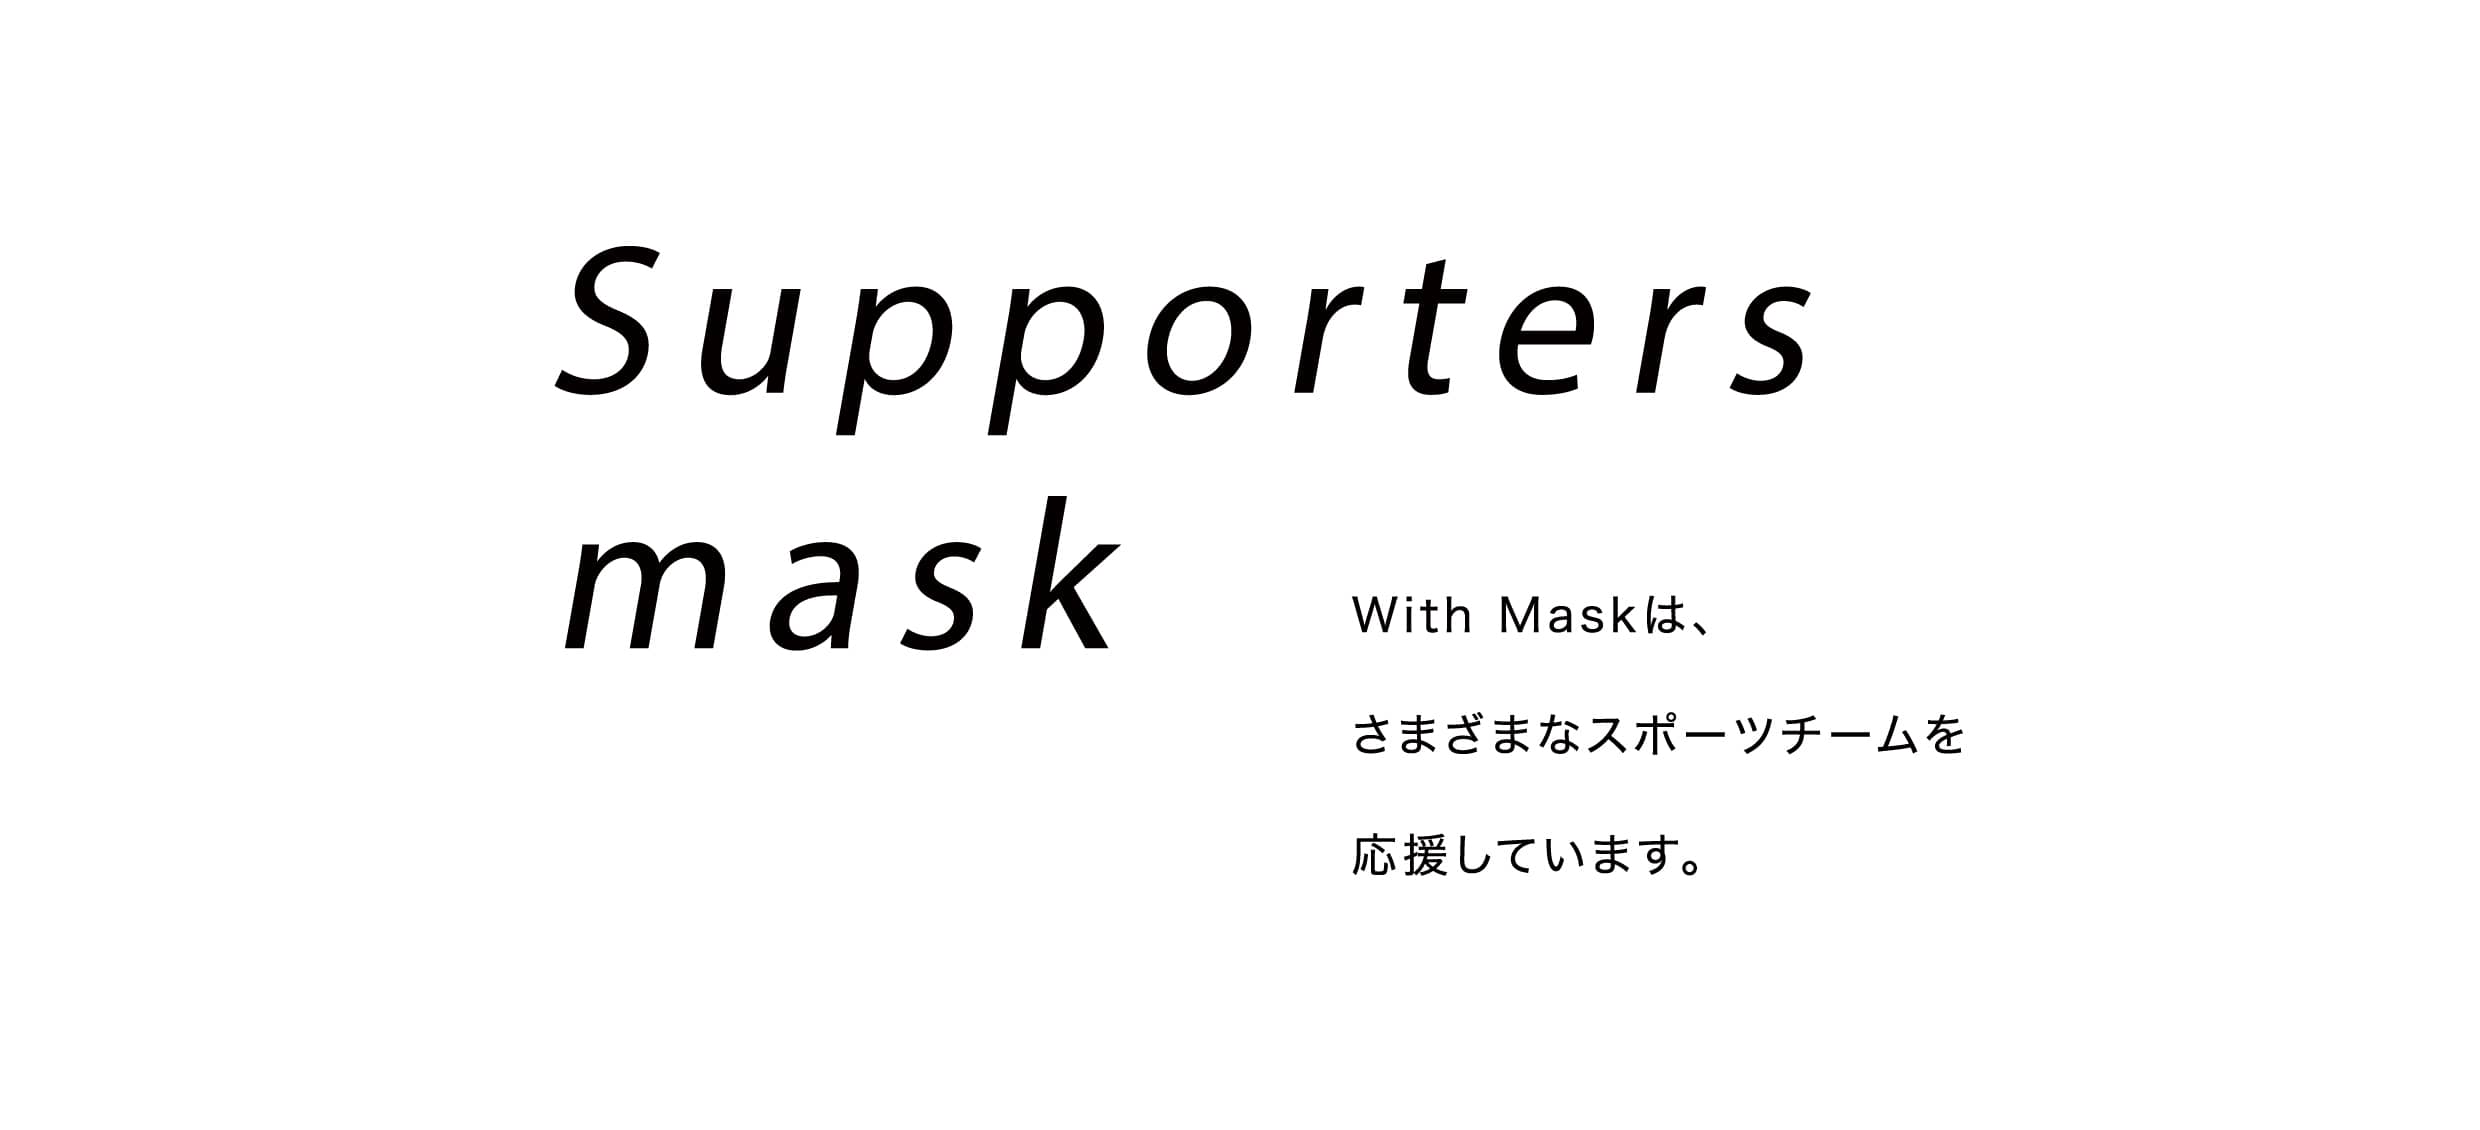 Supporters mask With Maskは、さまざまなスポーツチームを応援しています。